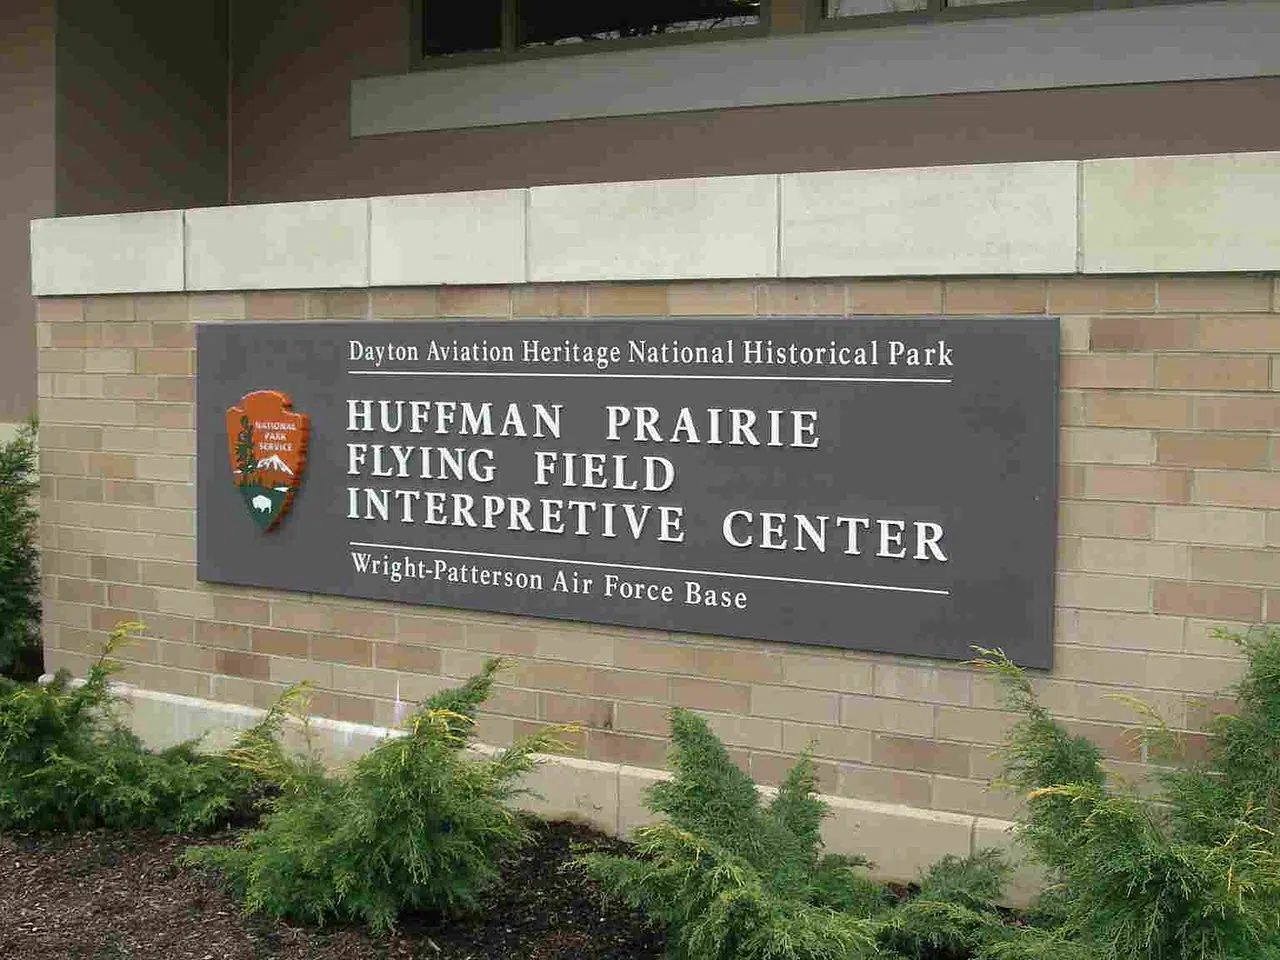 Sign Dayton Aviation Heritage National Historical Park